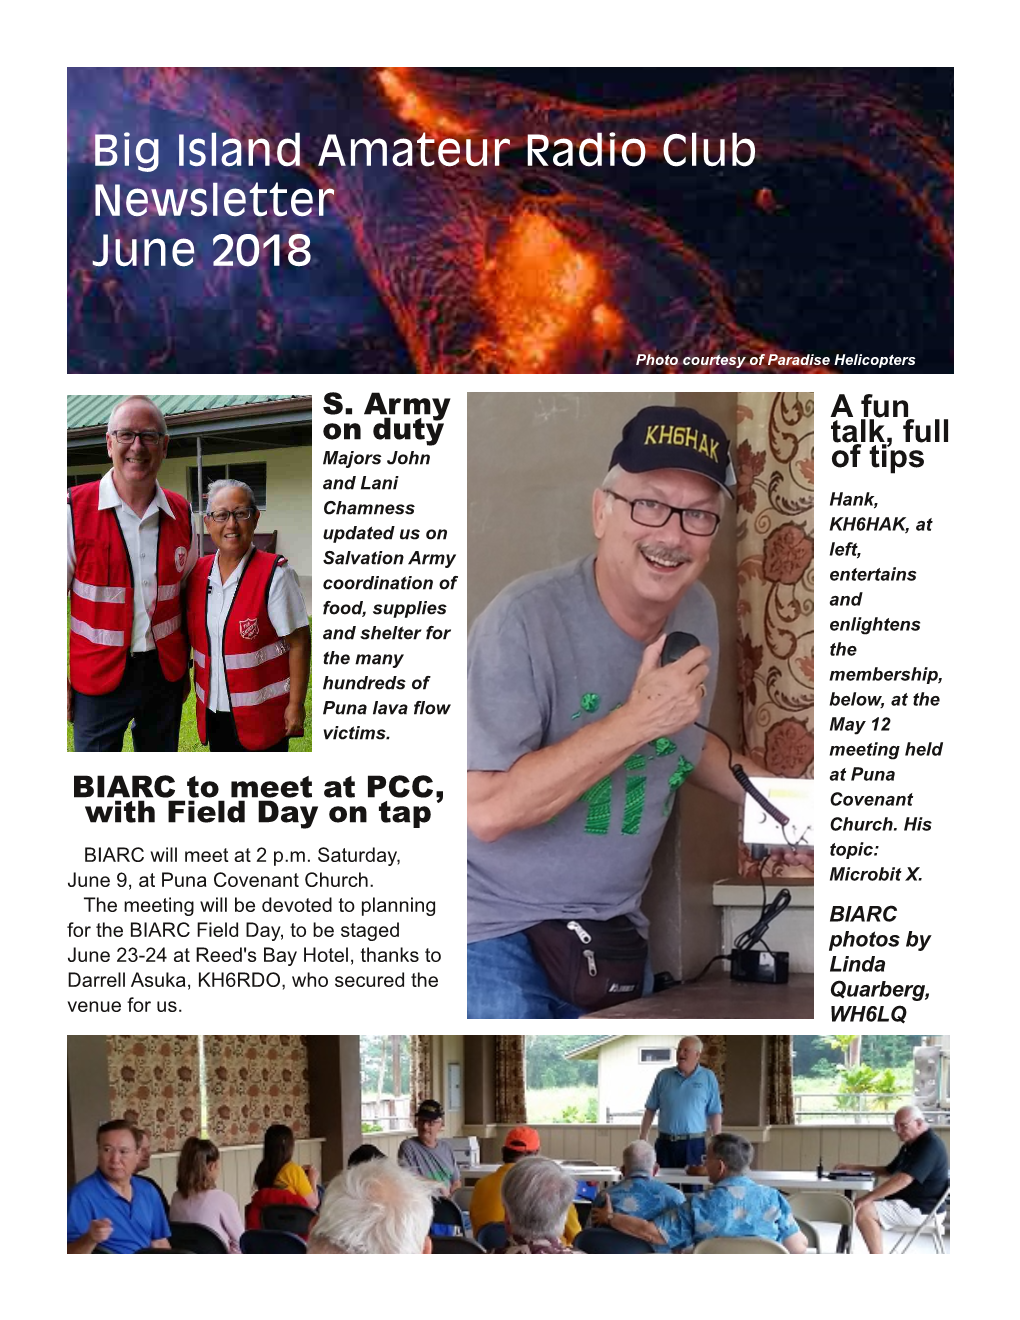 Big Island Amateur Radio Club Newsletter June 2018